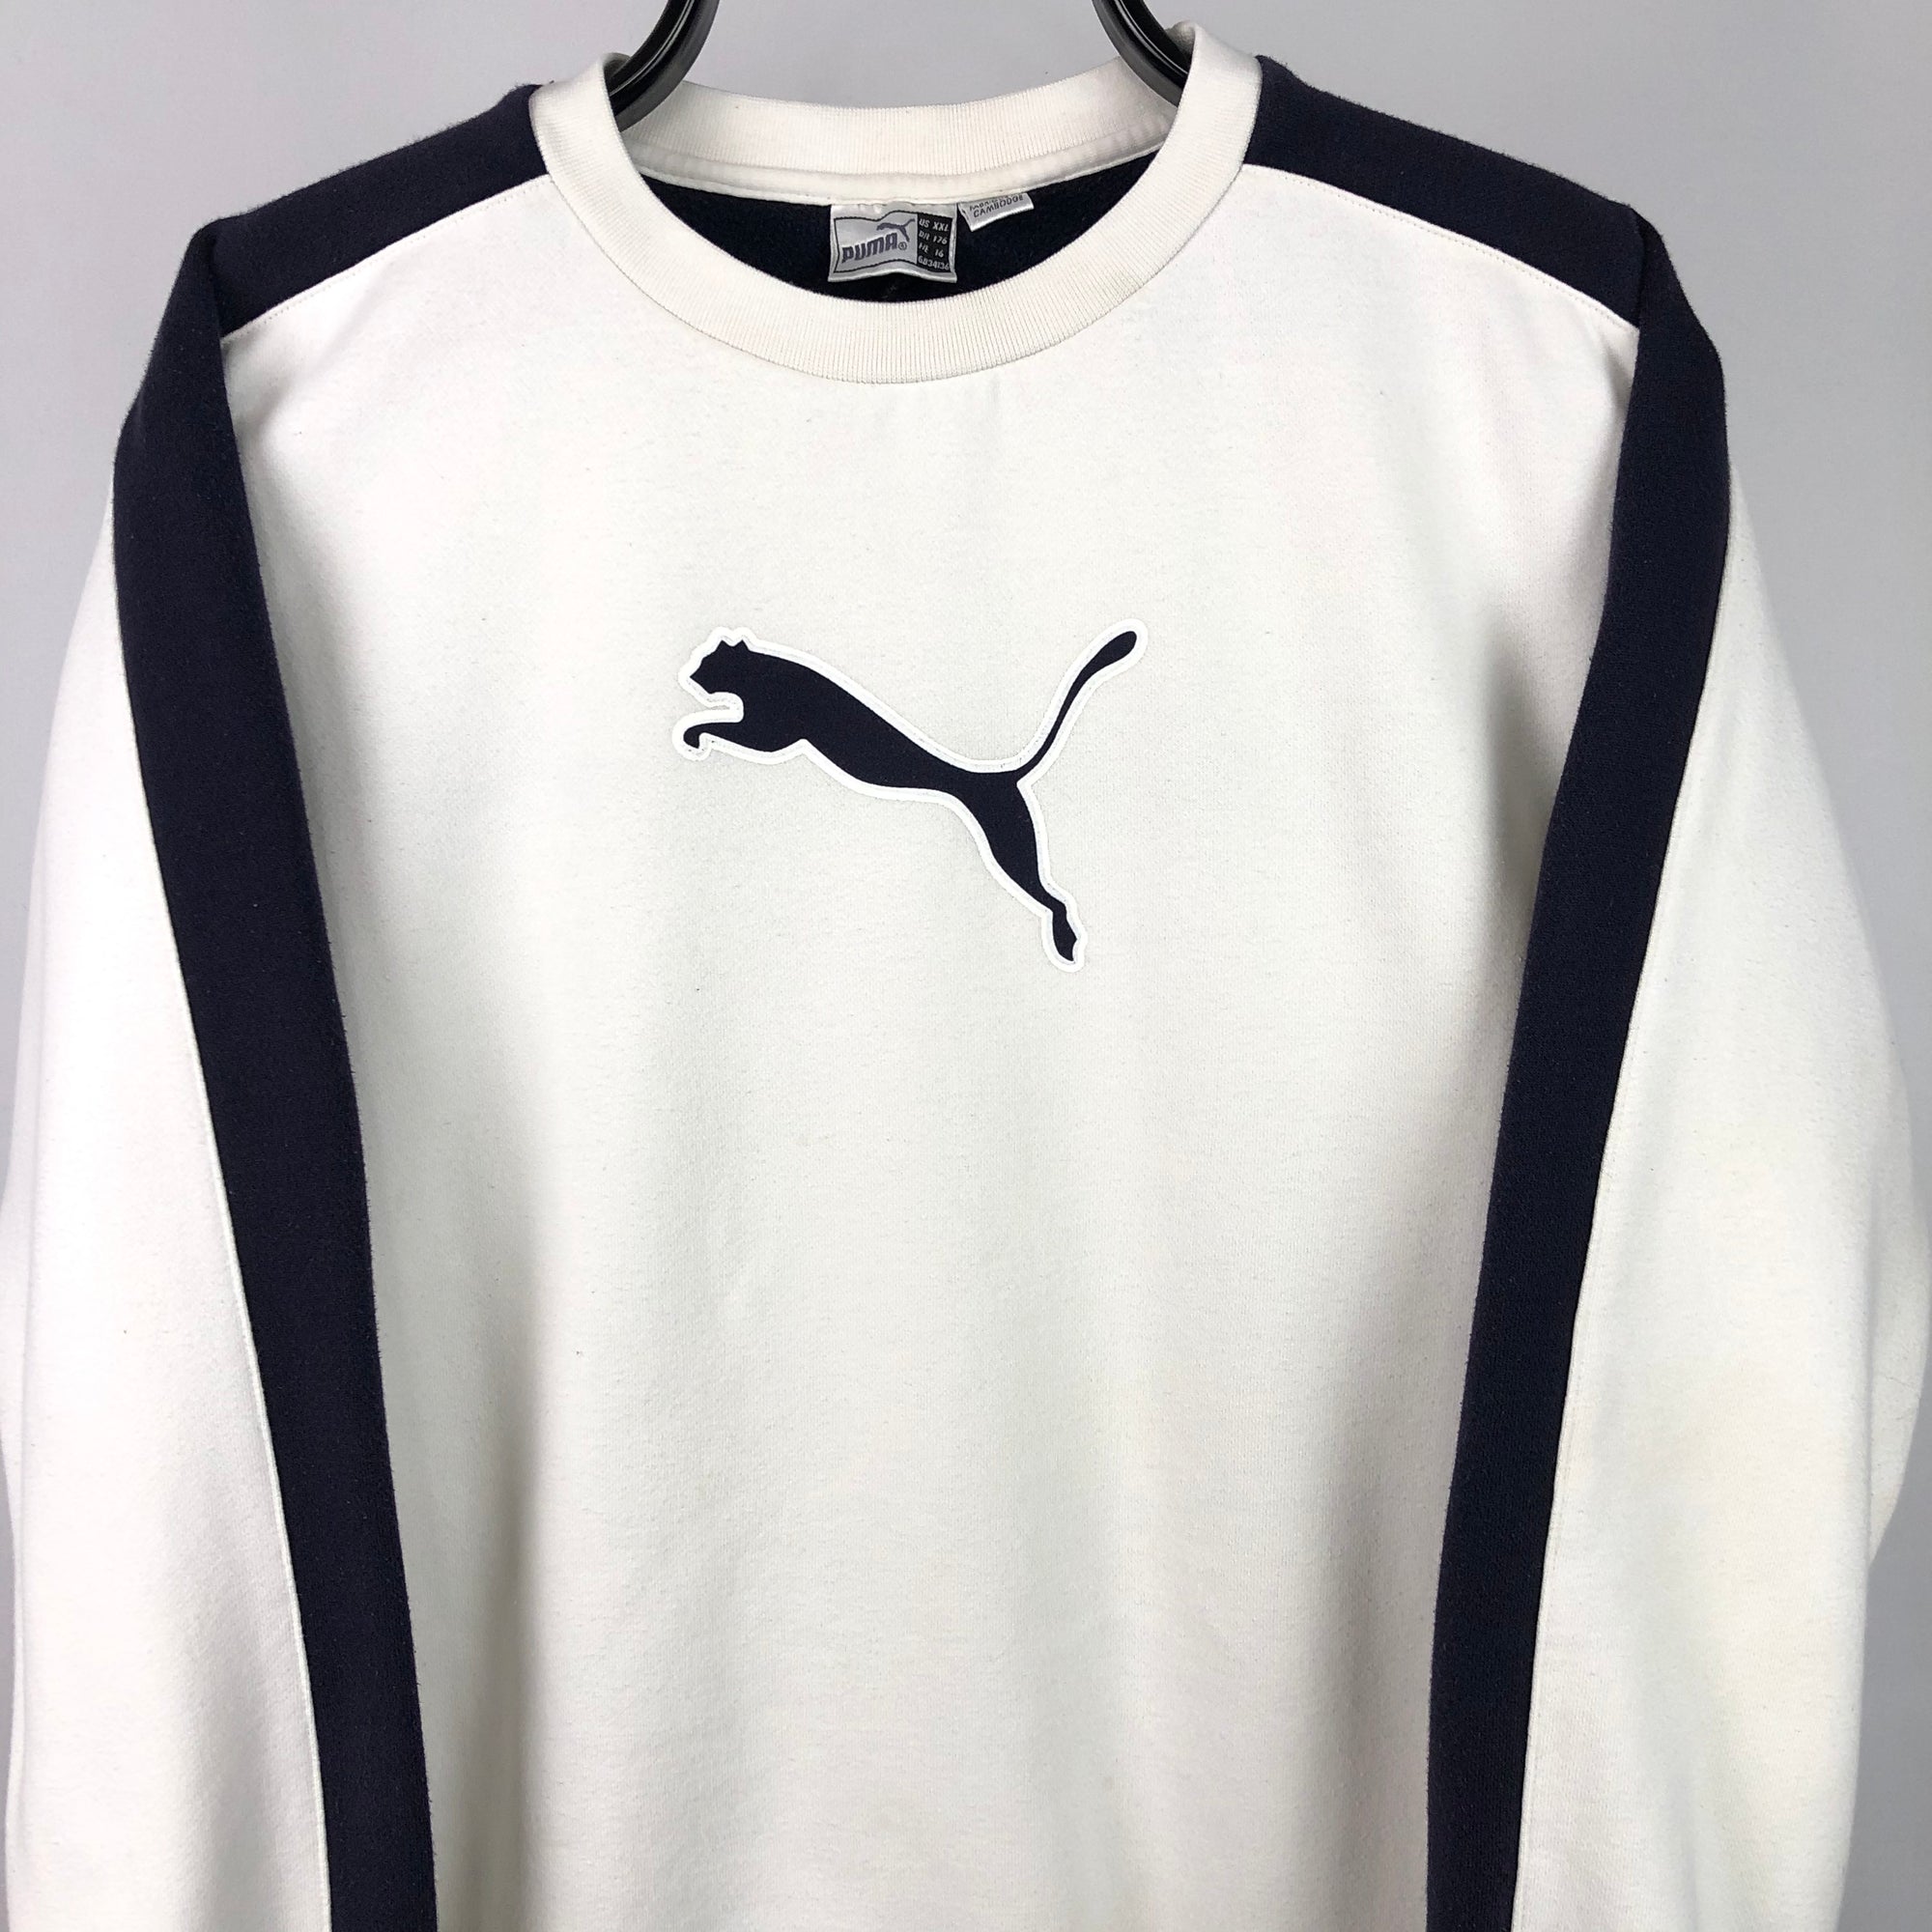 Vintage Puma Big Logo Sweatshirt in White/Navy - Men's Medium/Women's Large